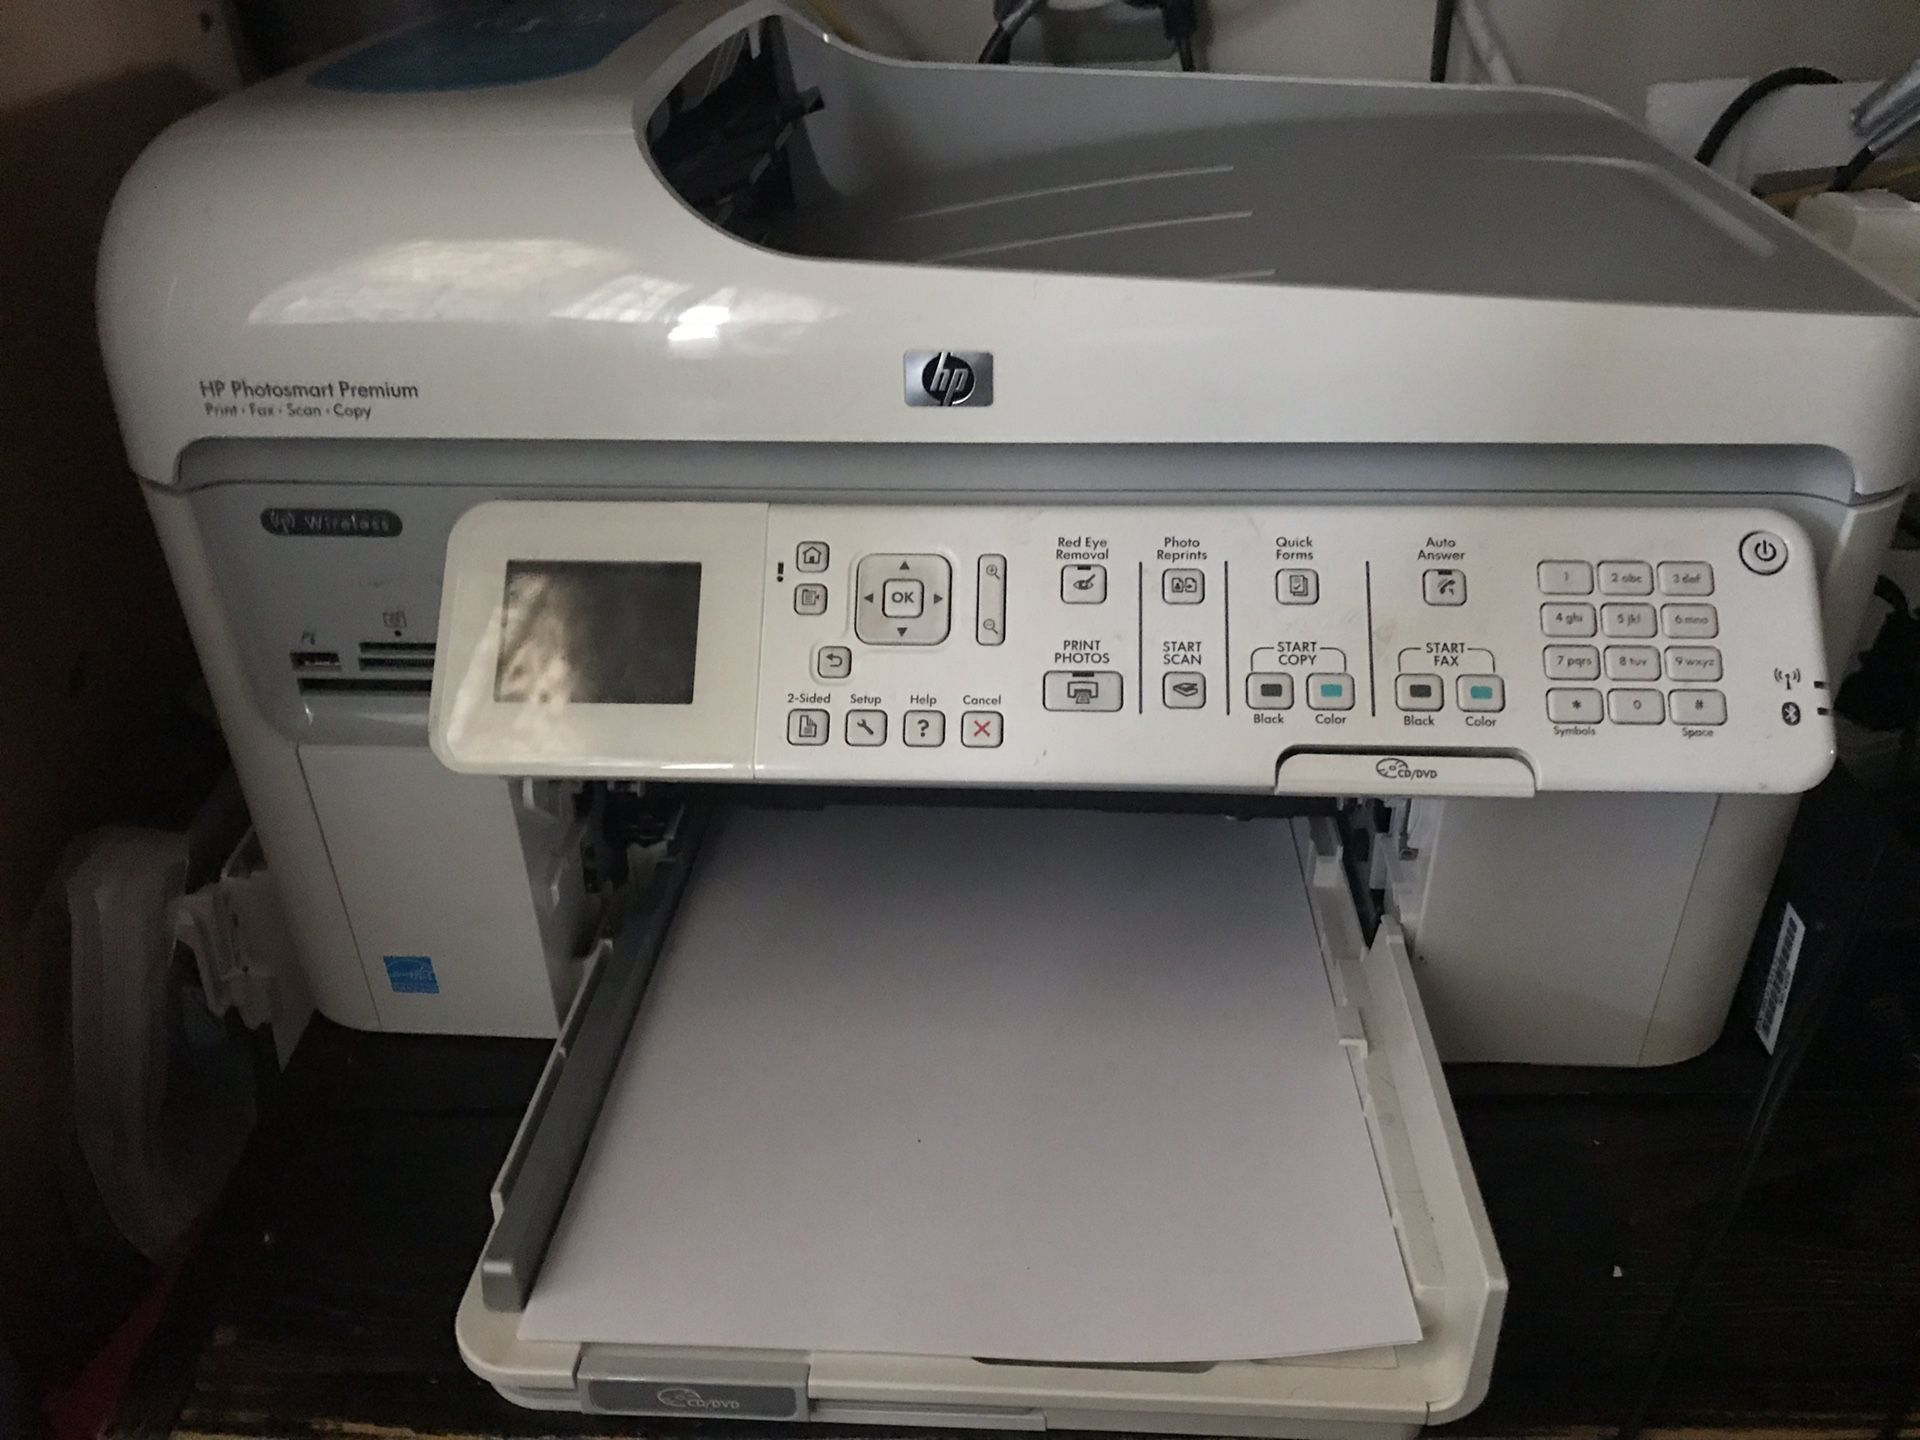 Hp photo smart printer/scanner fax copy